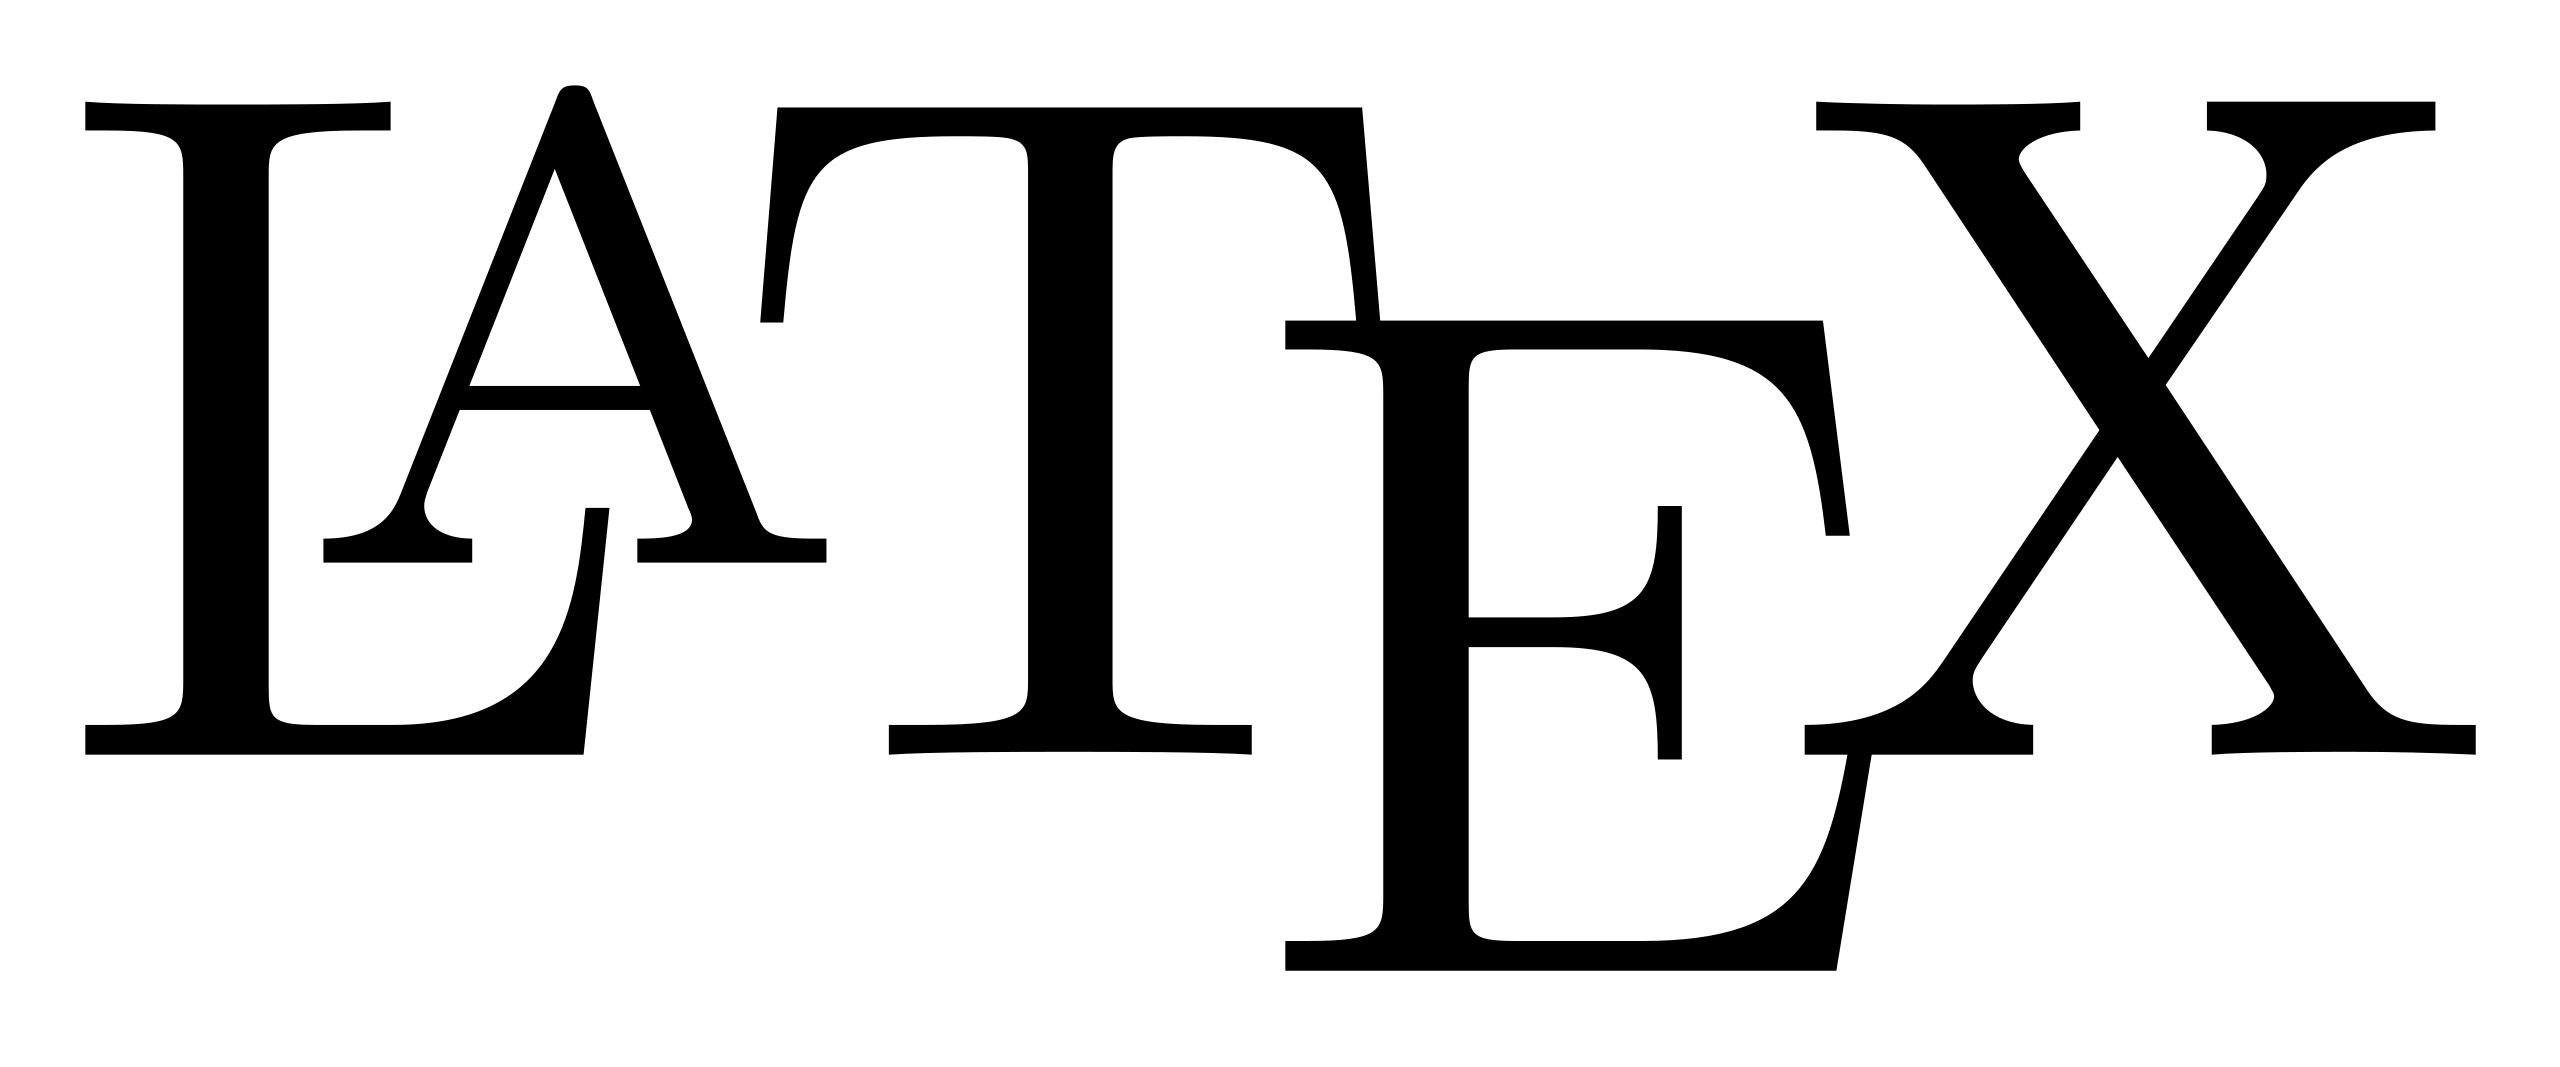 LaTeX_logo svg